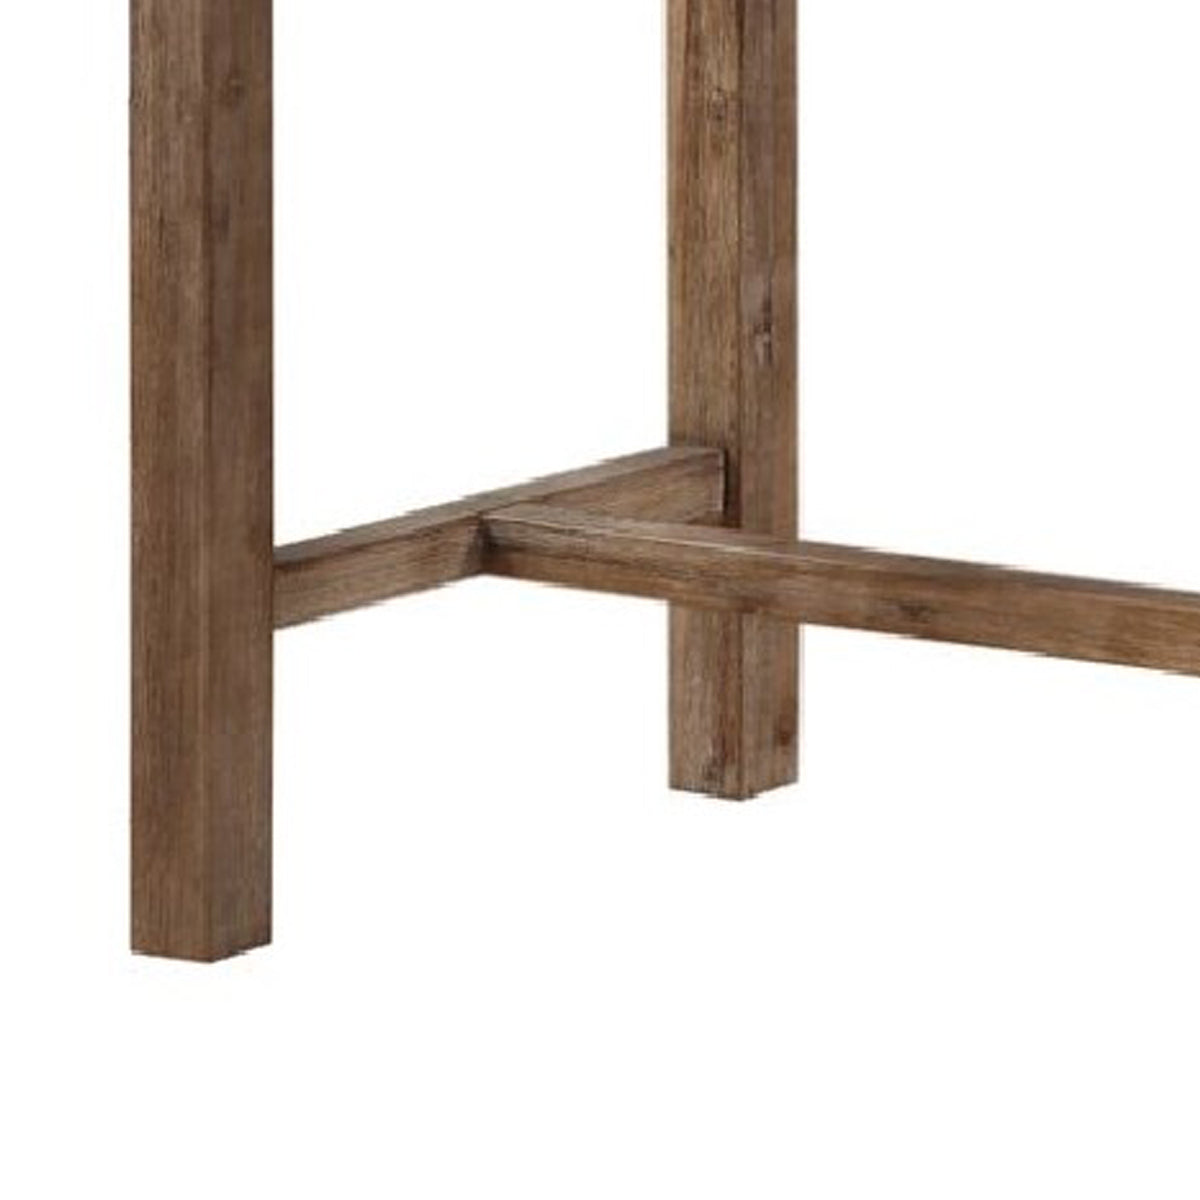 Rectangular Wooden Frame Pub Table With Trestle Base